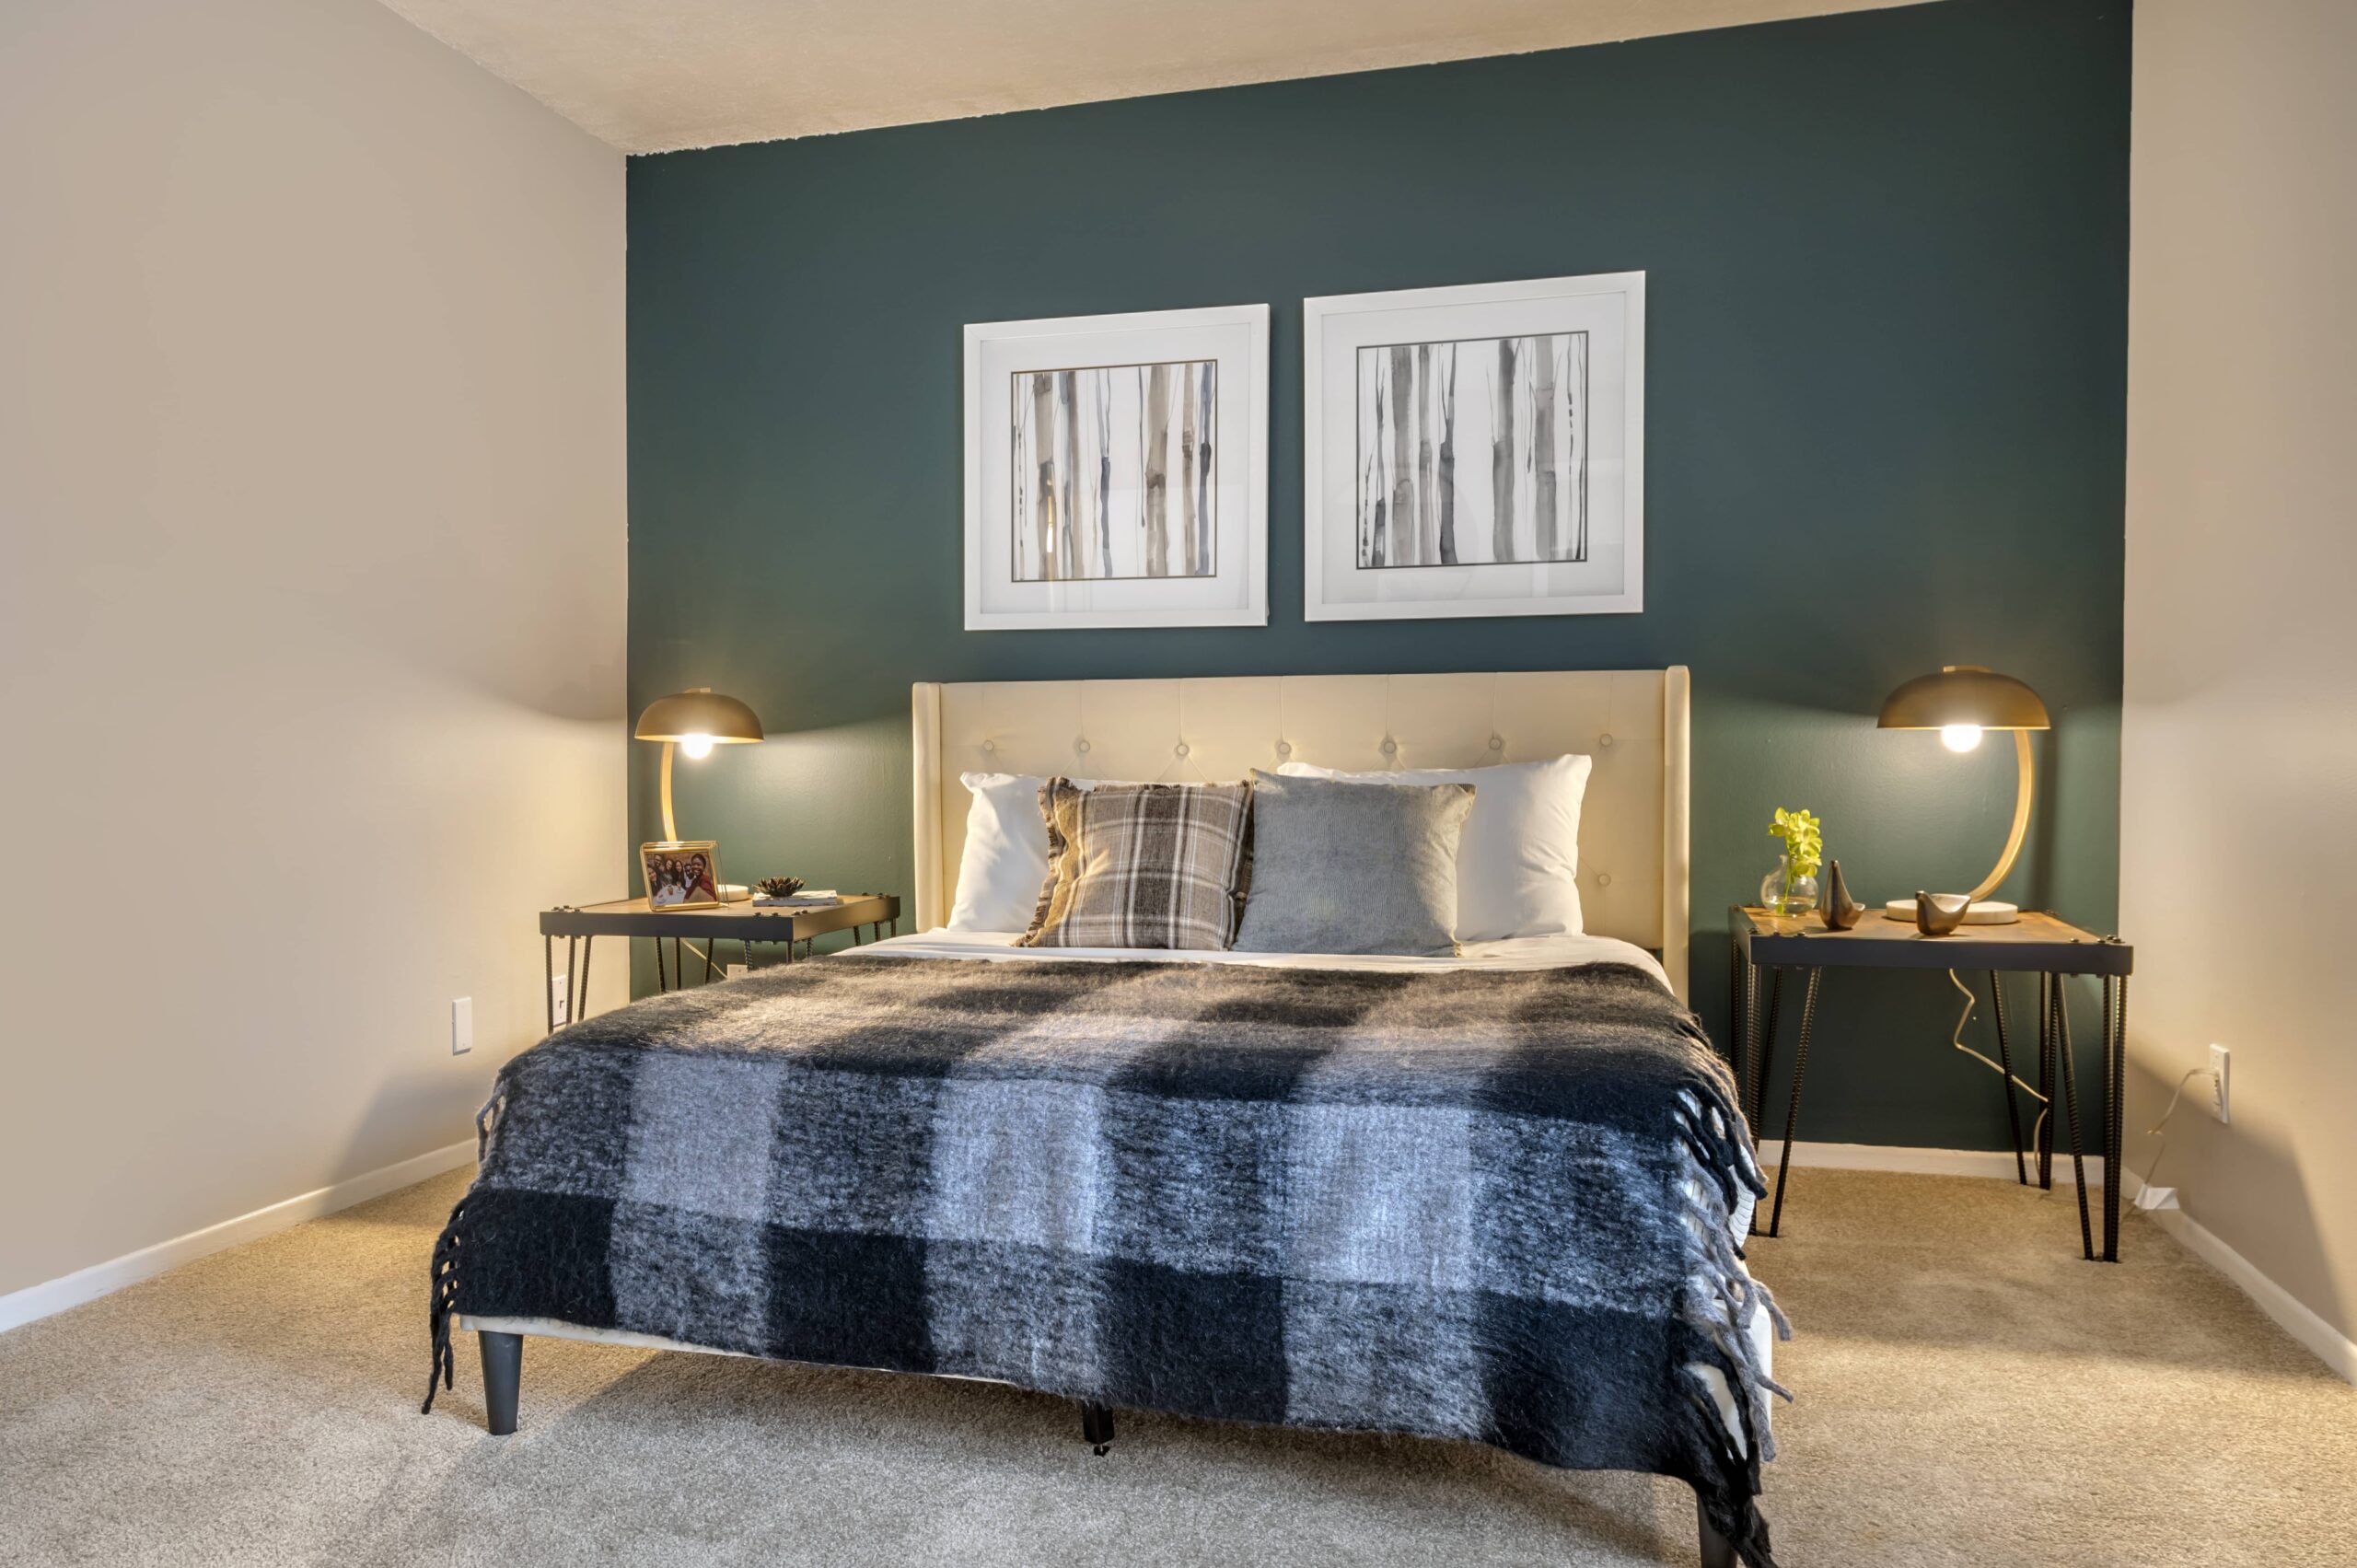 Image of designed model apartment bedroom assembled by Model55